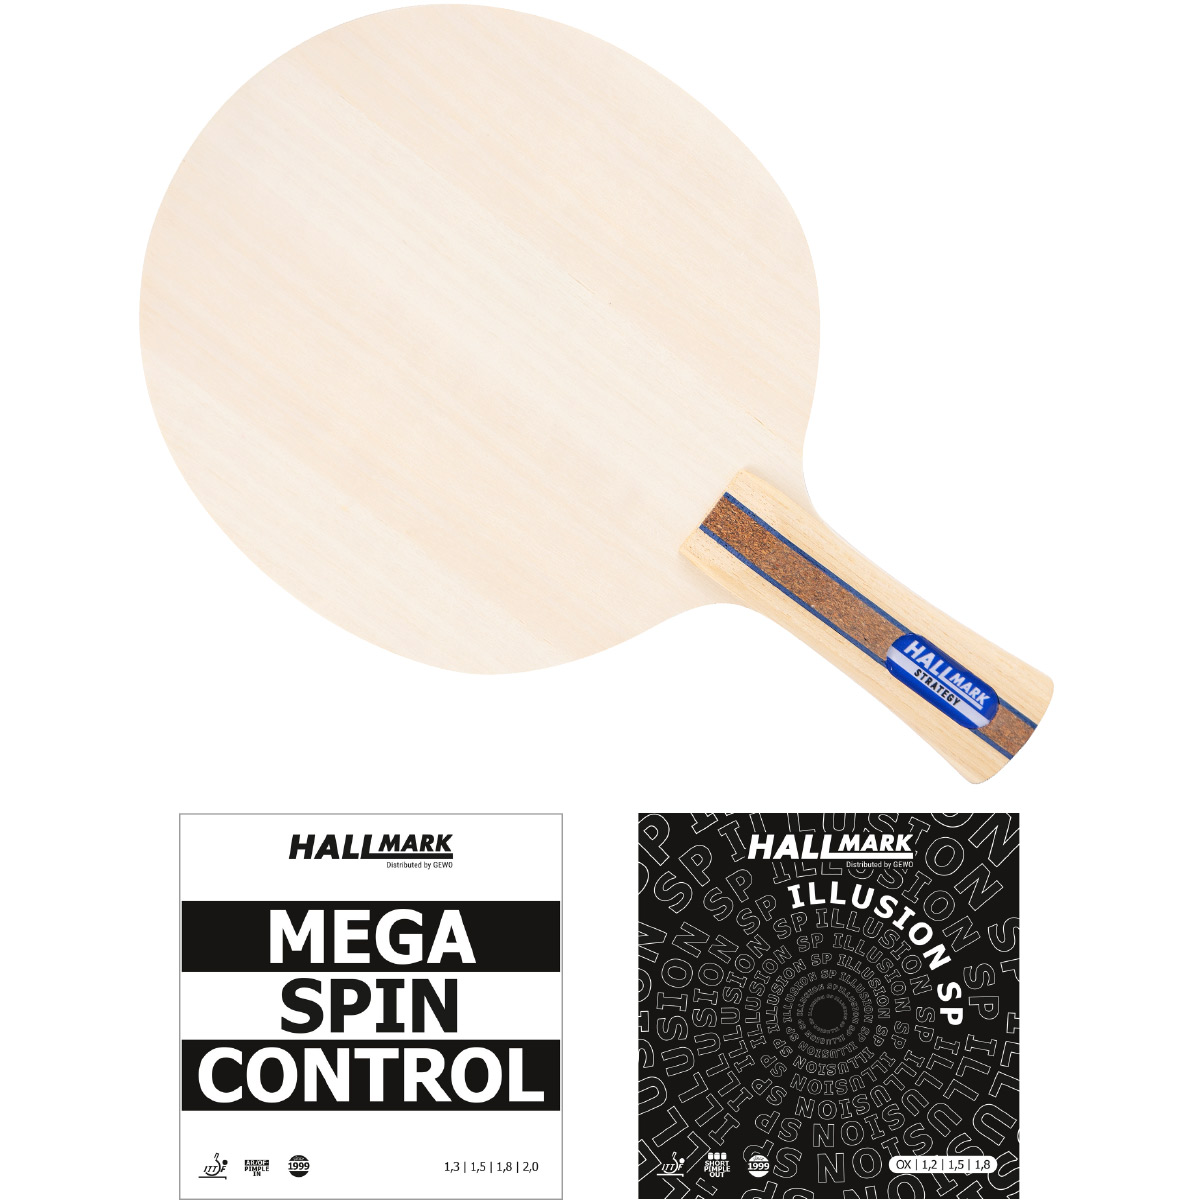 HALLMARK Schläger: Holz Strategy mit Mega Spin Control + Illusion-SP